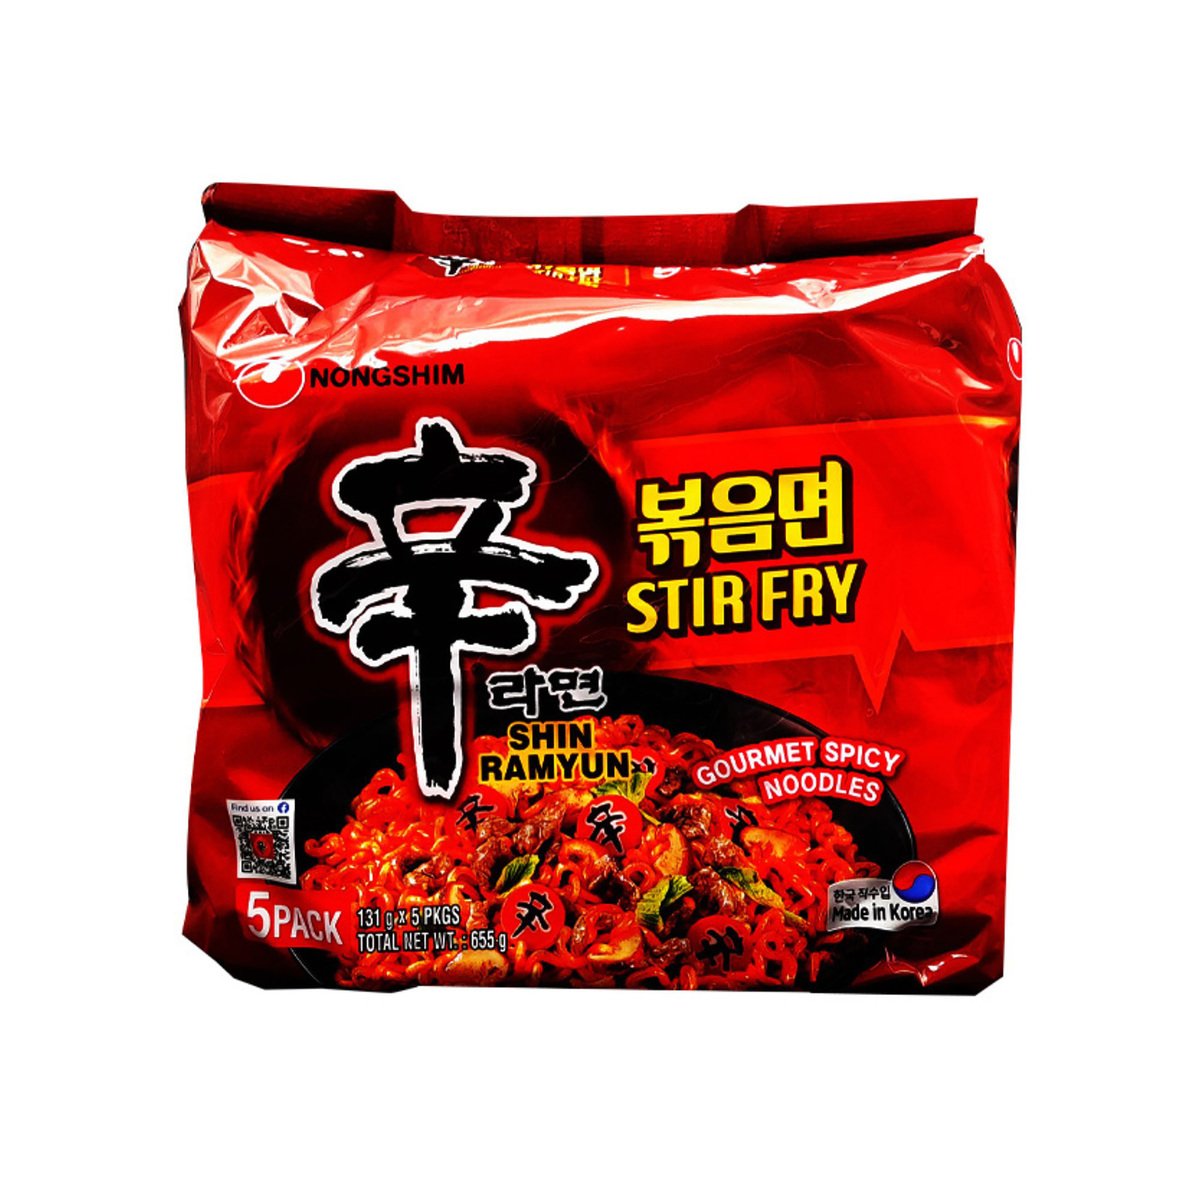 Nongshim Shin Ramyun Stir Fry Gourmet Spicy Noodles 131 g